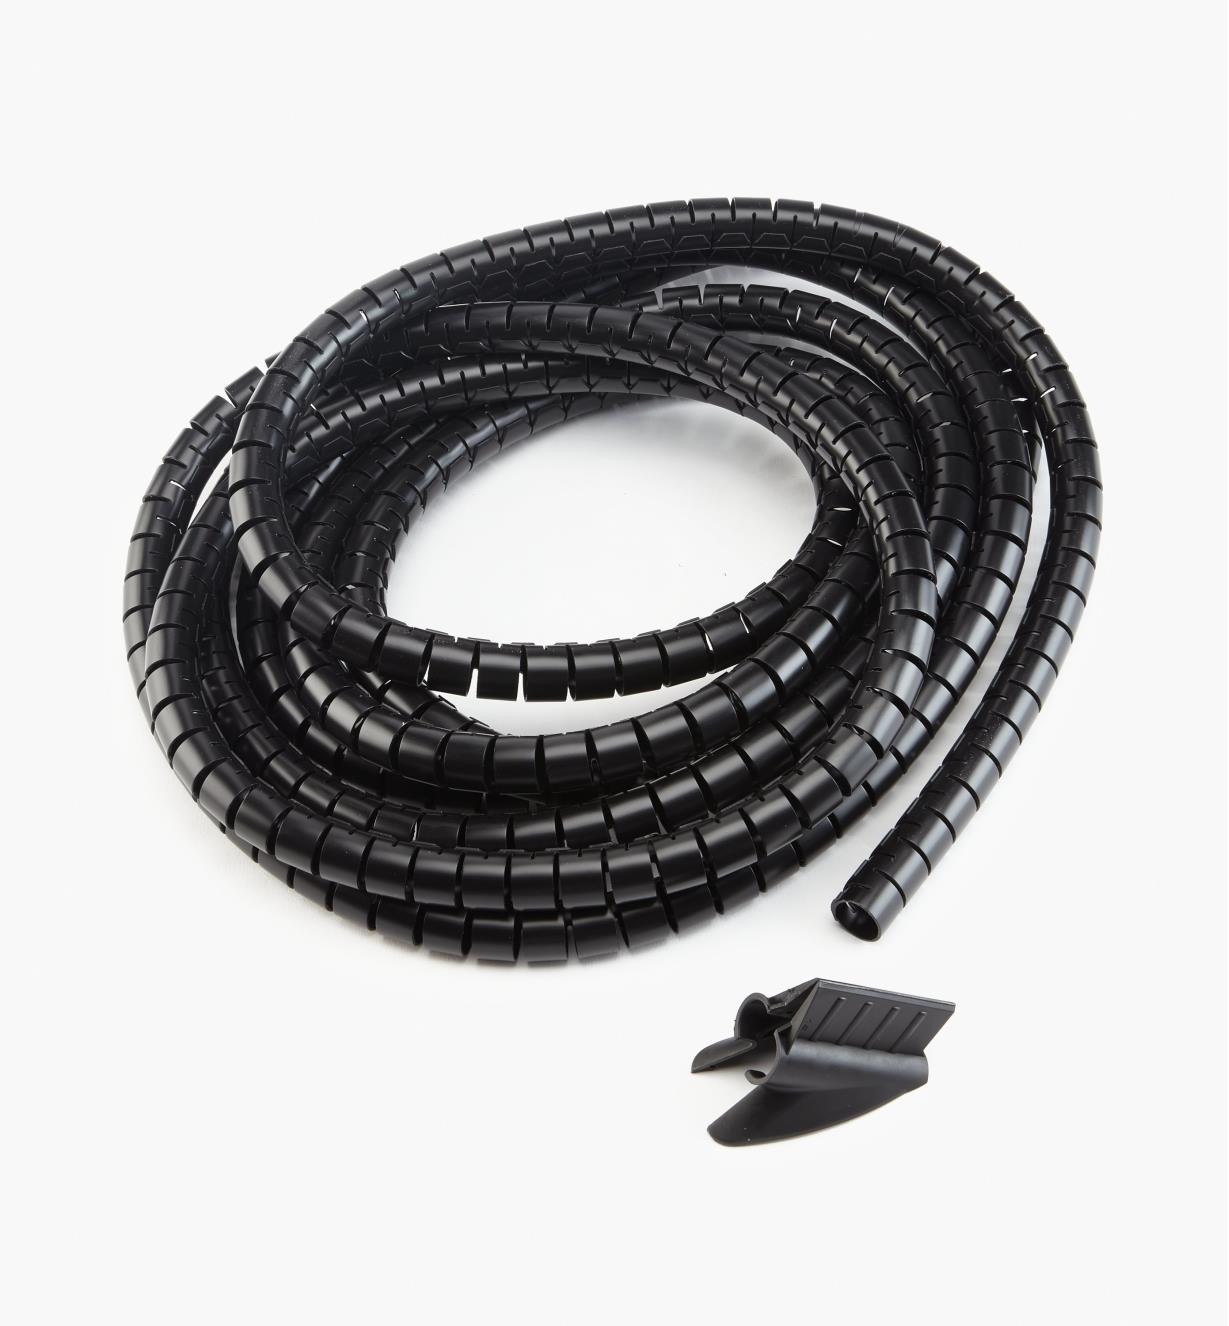 03K7705 - 15' Cable Wrap & Zip Key